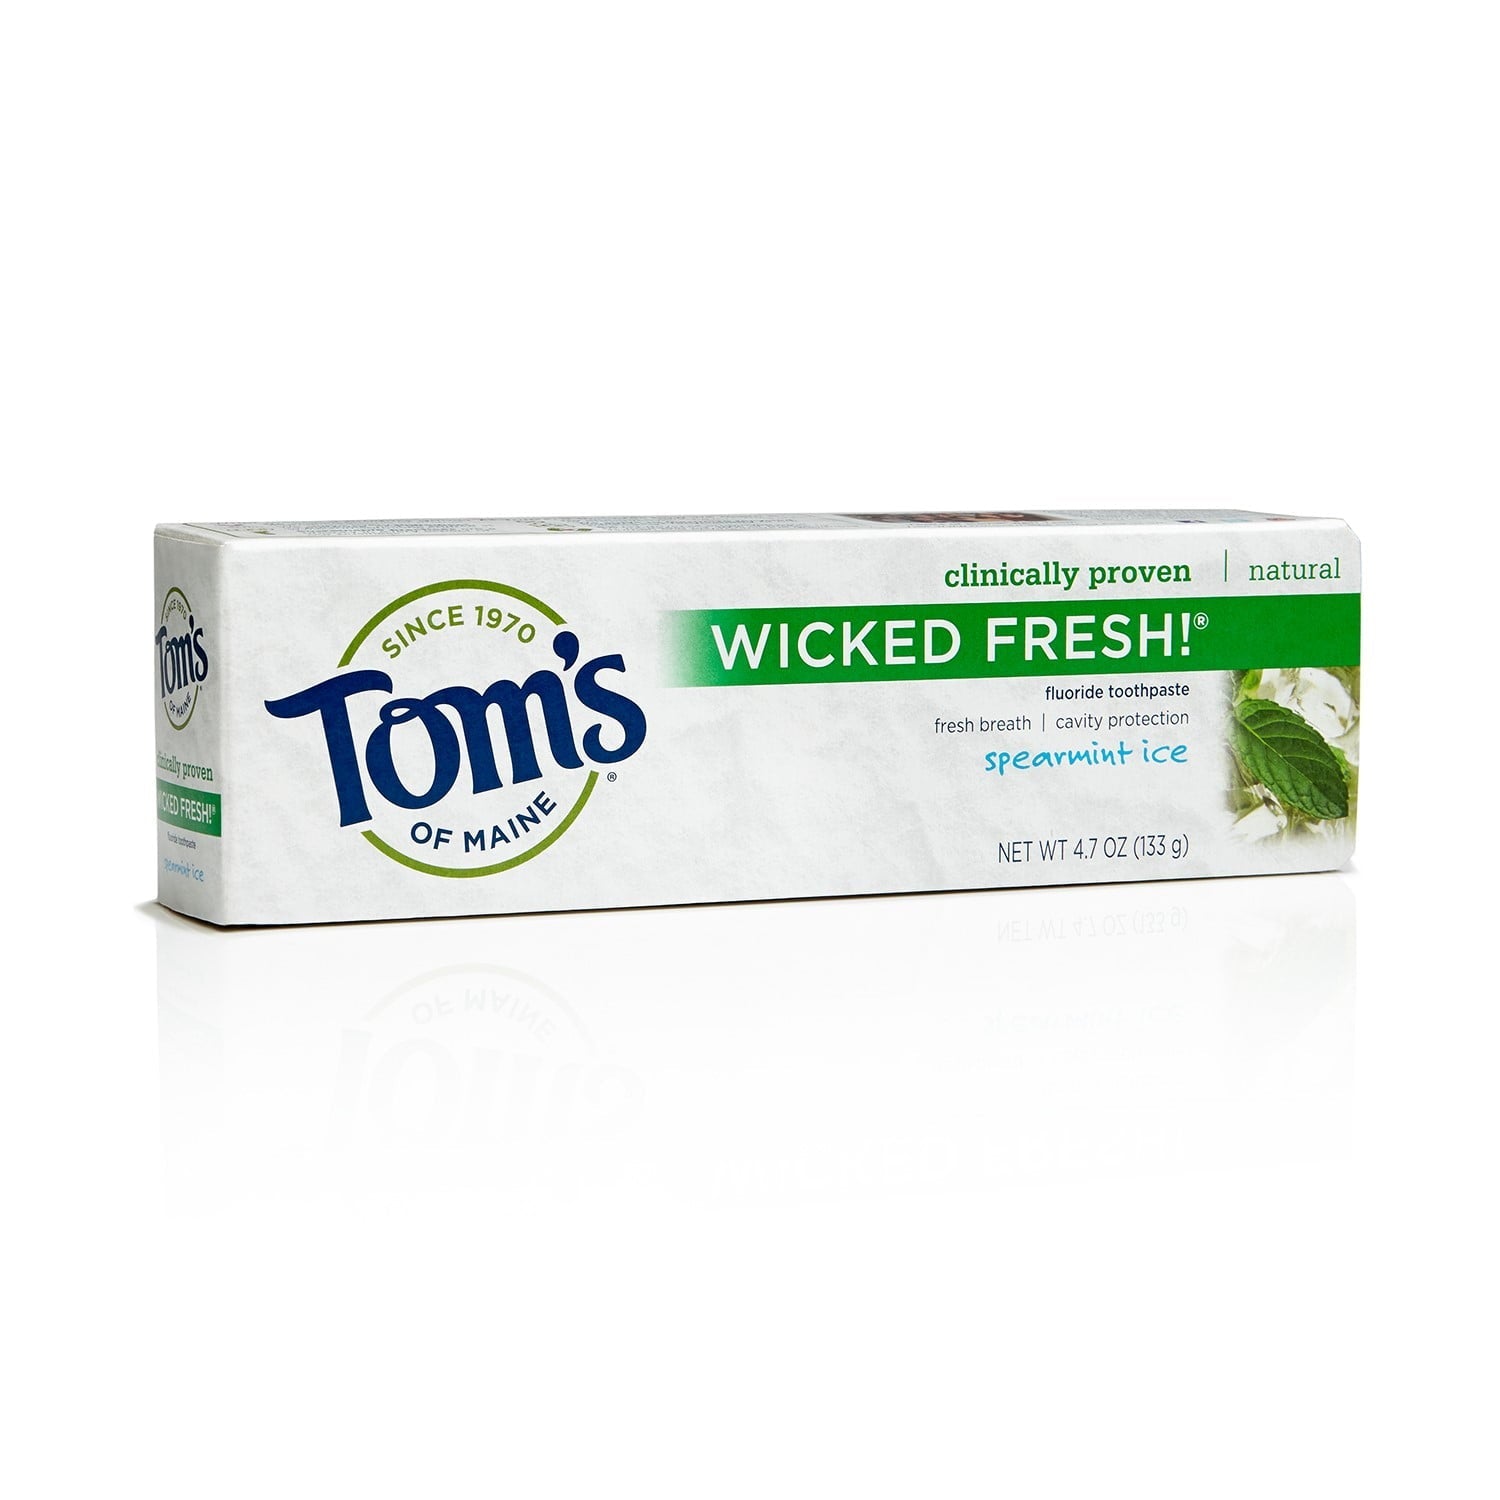 Tom's Of Maine Wicked Fresh! Fluoride Toothpaste 4.7 Oz Tube